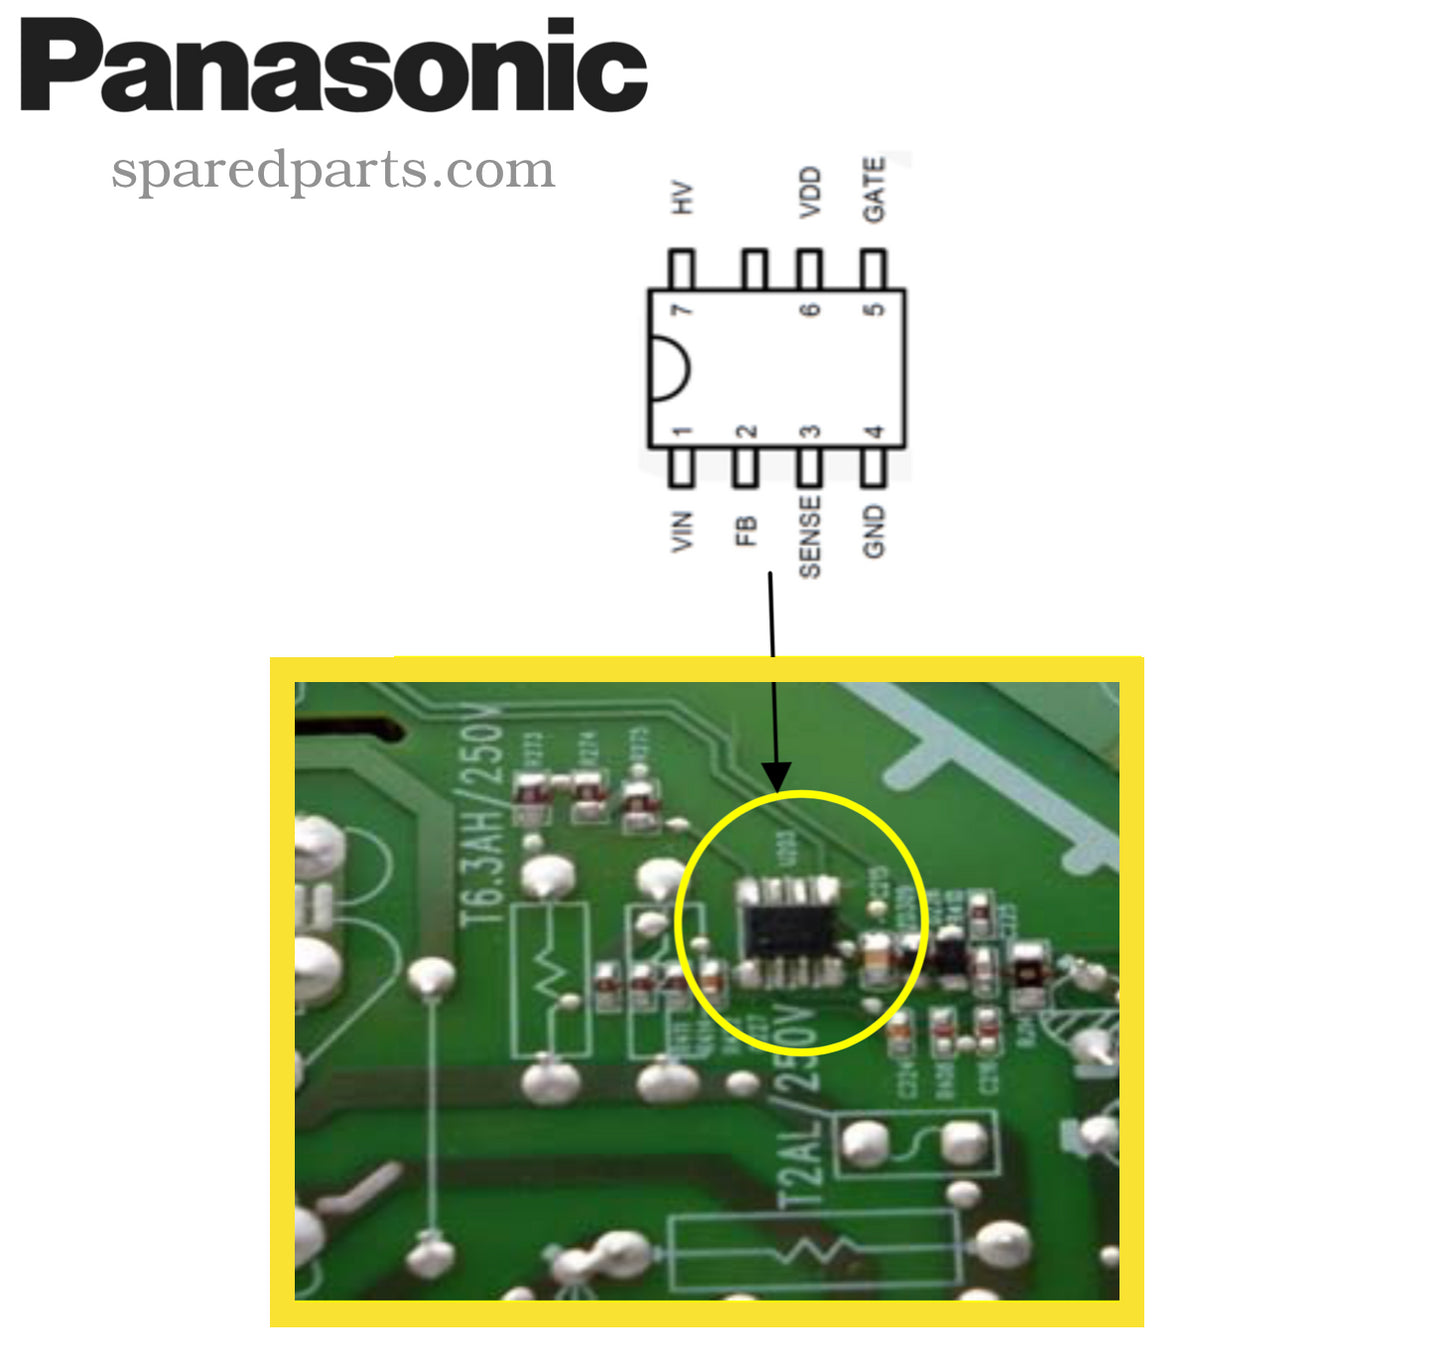 Panasonic 6755U IC TZS9EK097 (U203) B159-201 4H.B1590.041